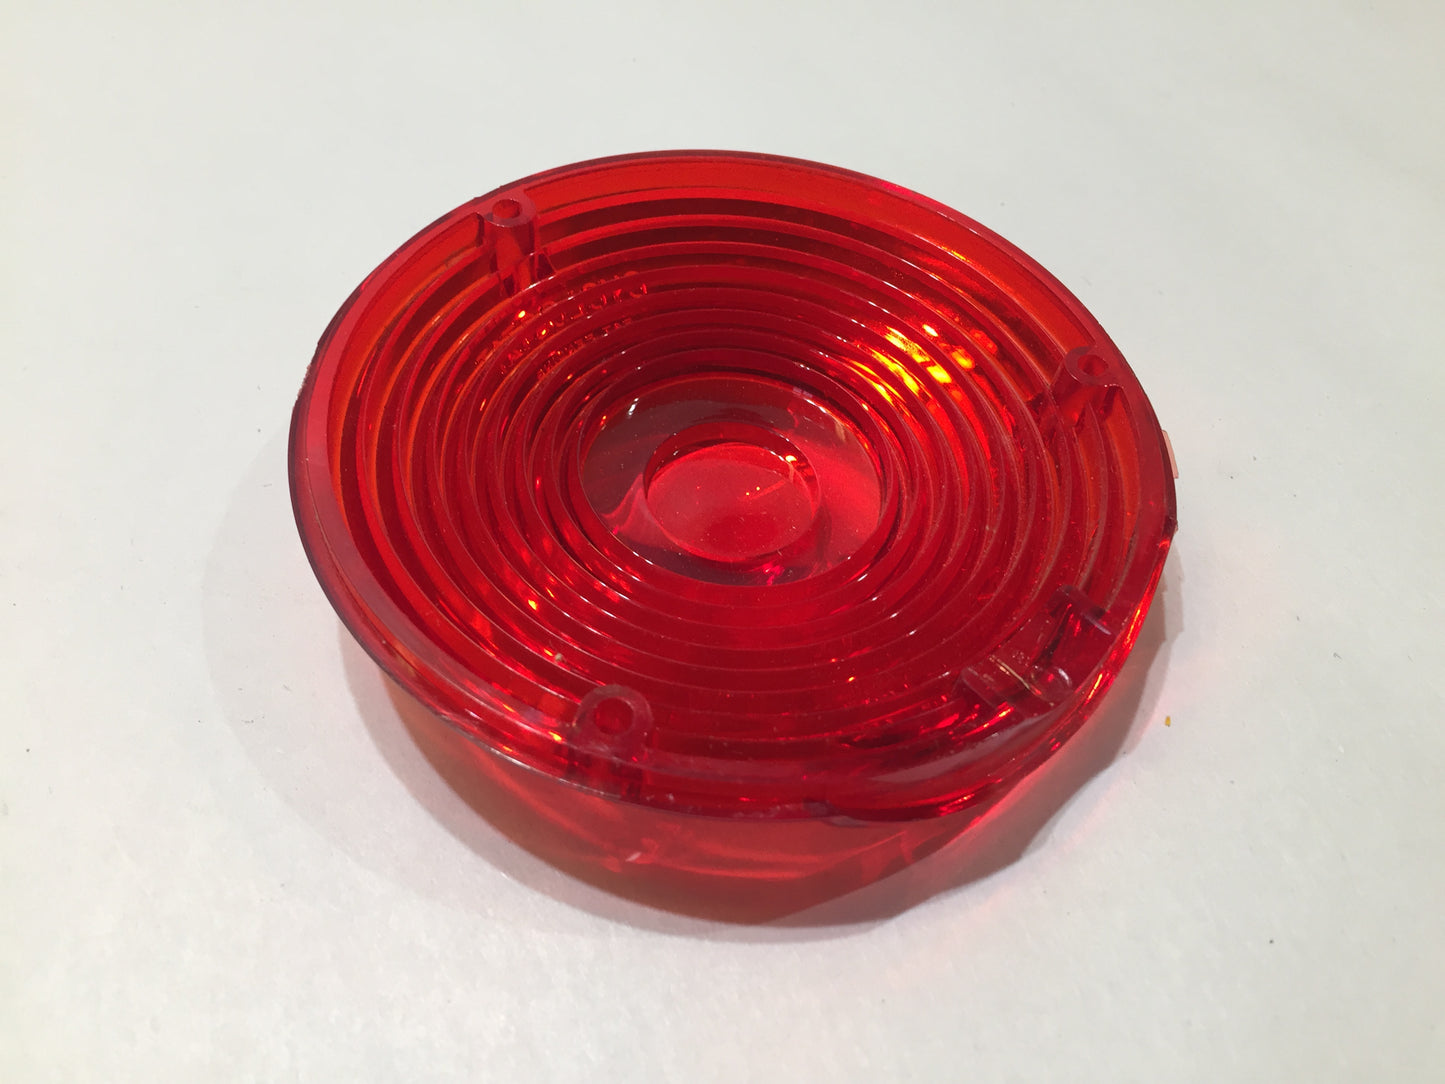 Signal Stat 2678R Red Marker Lamp Lens